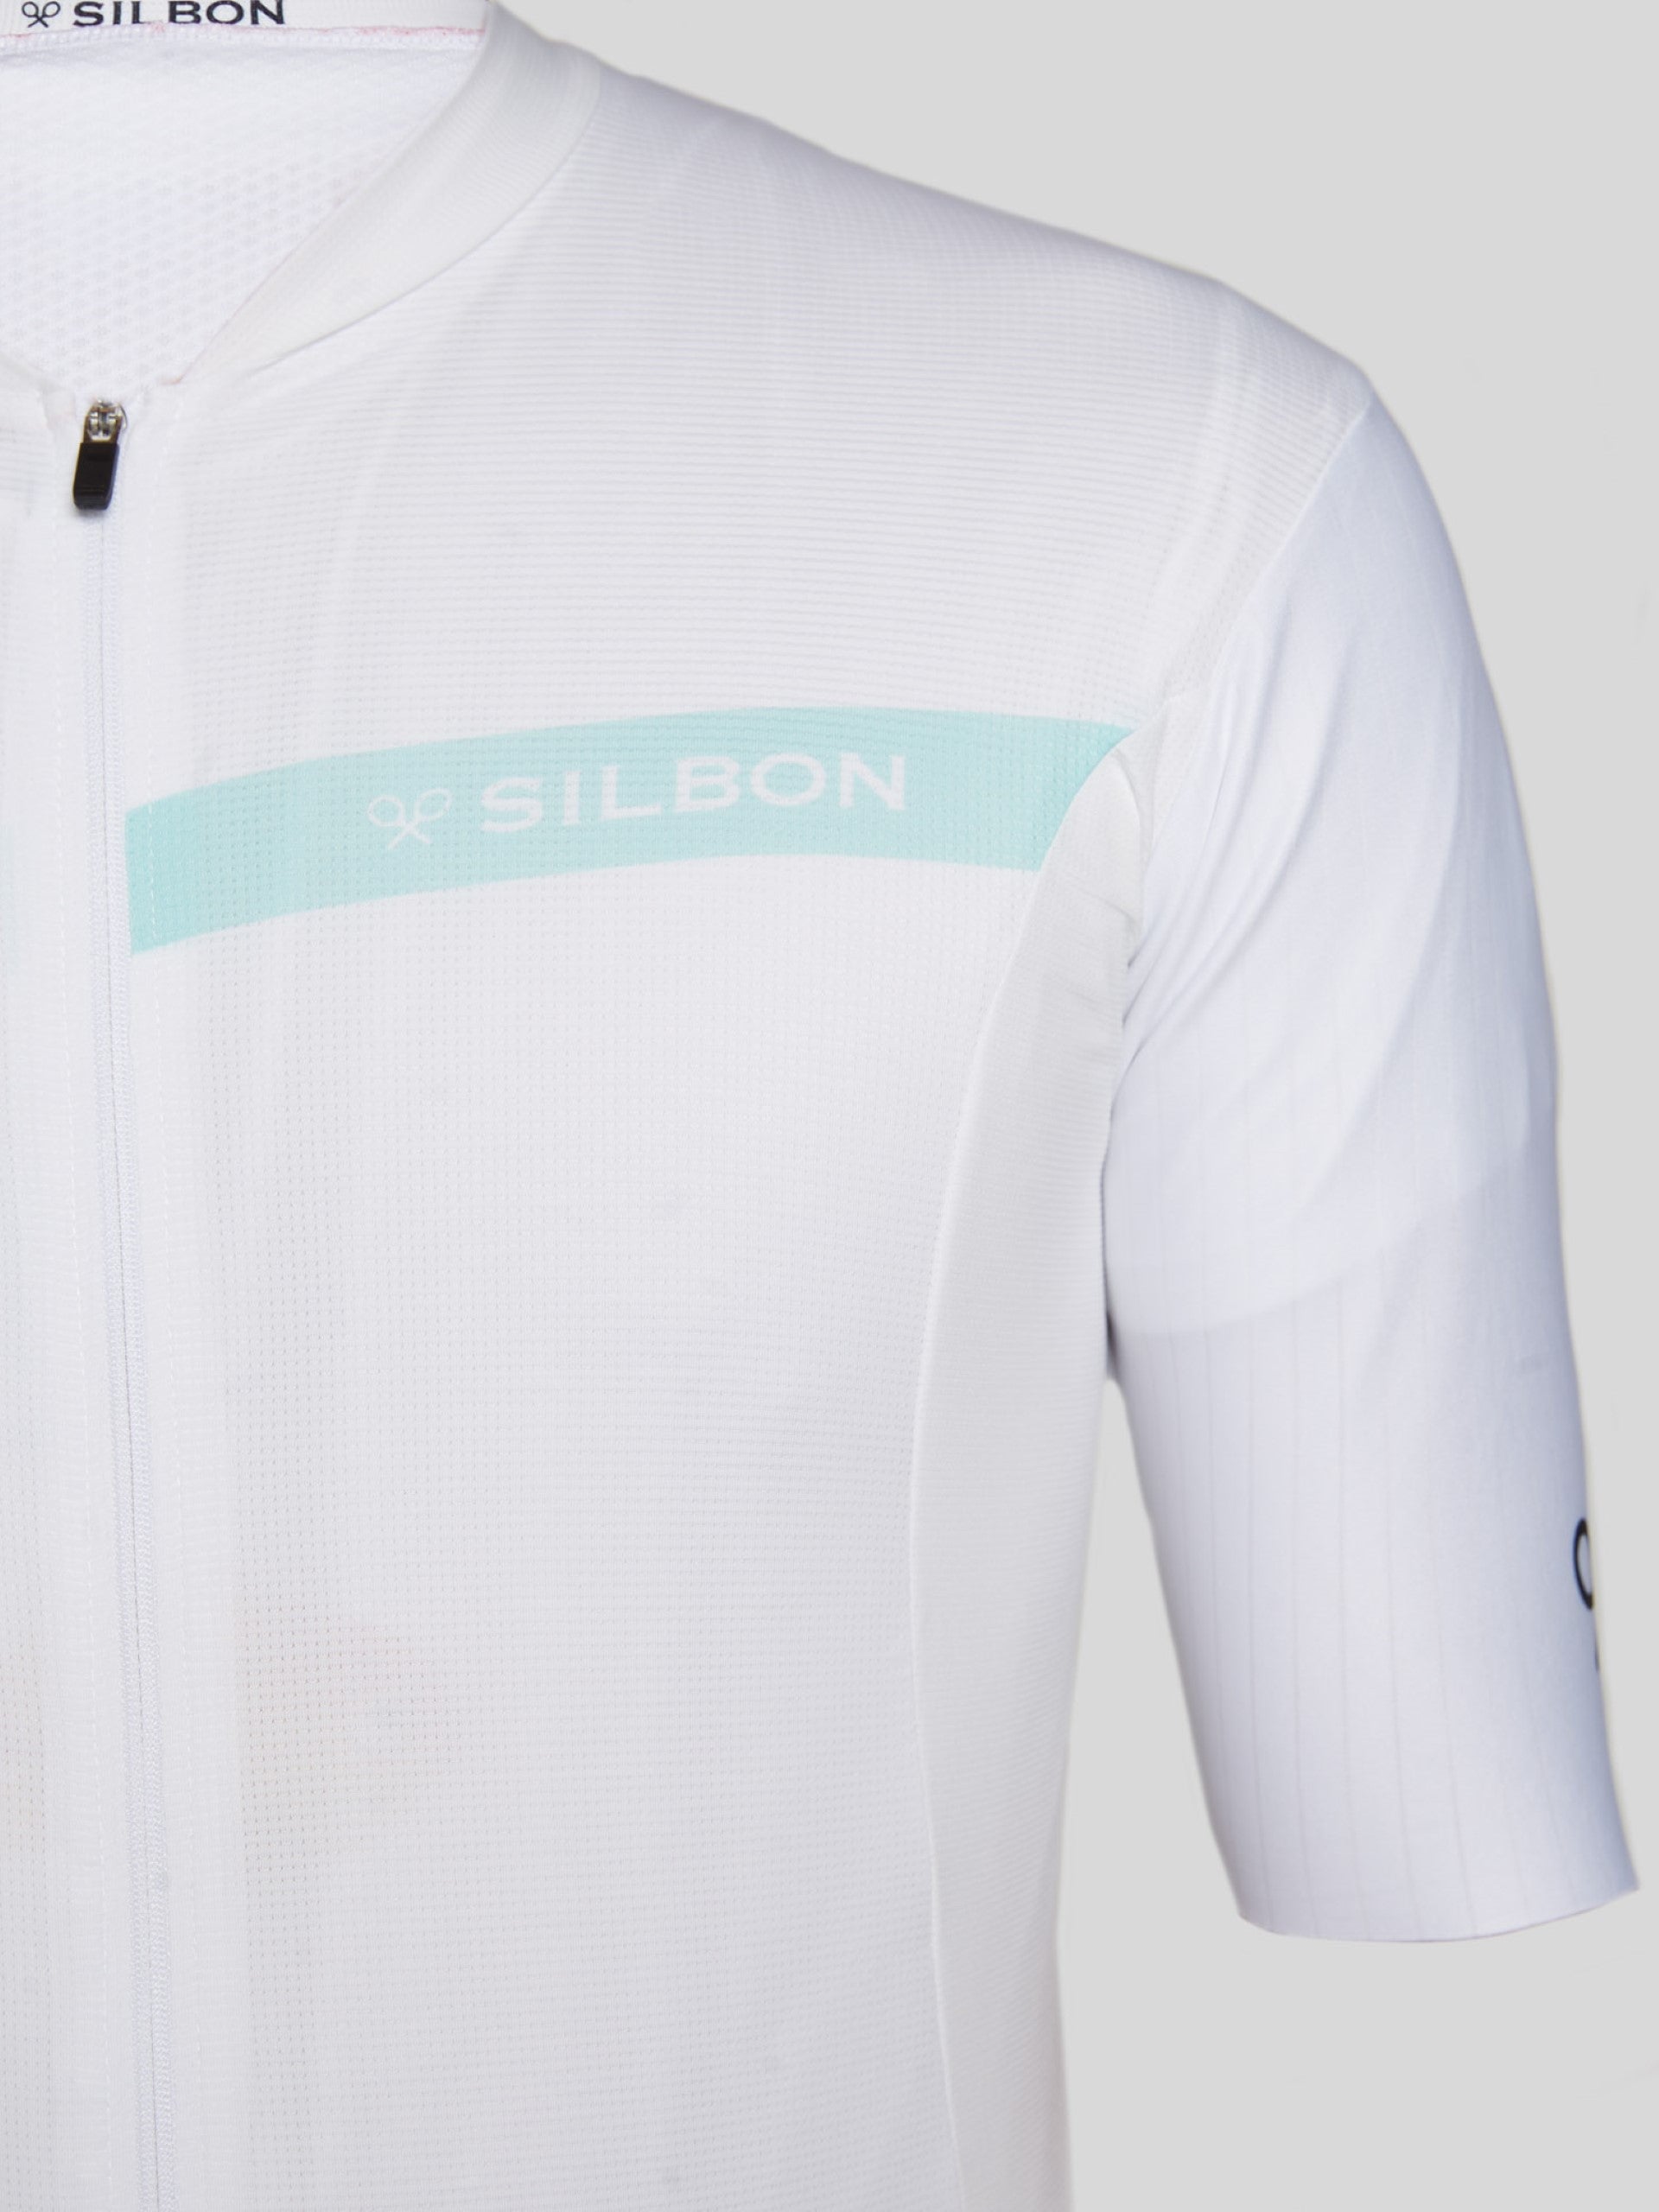 Aquamarine white silbon jersey